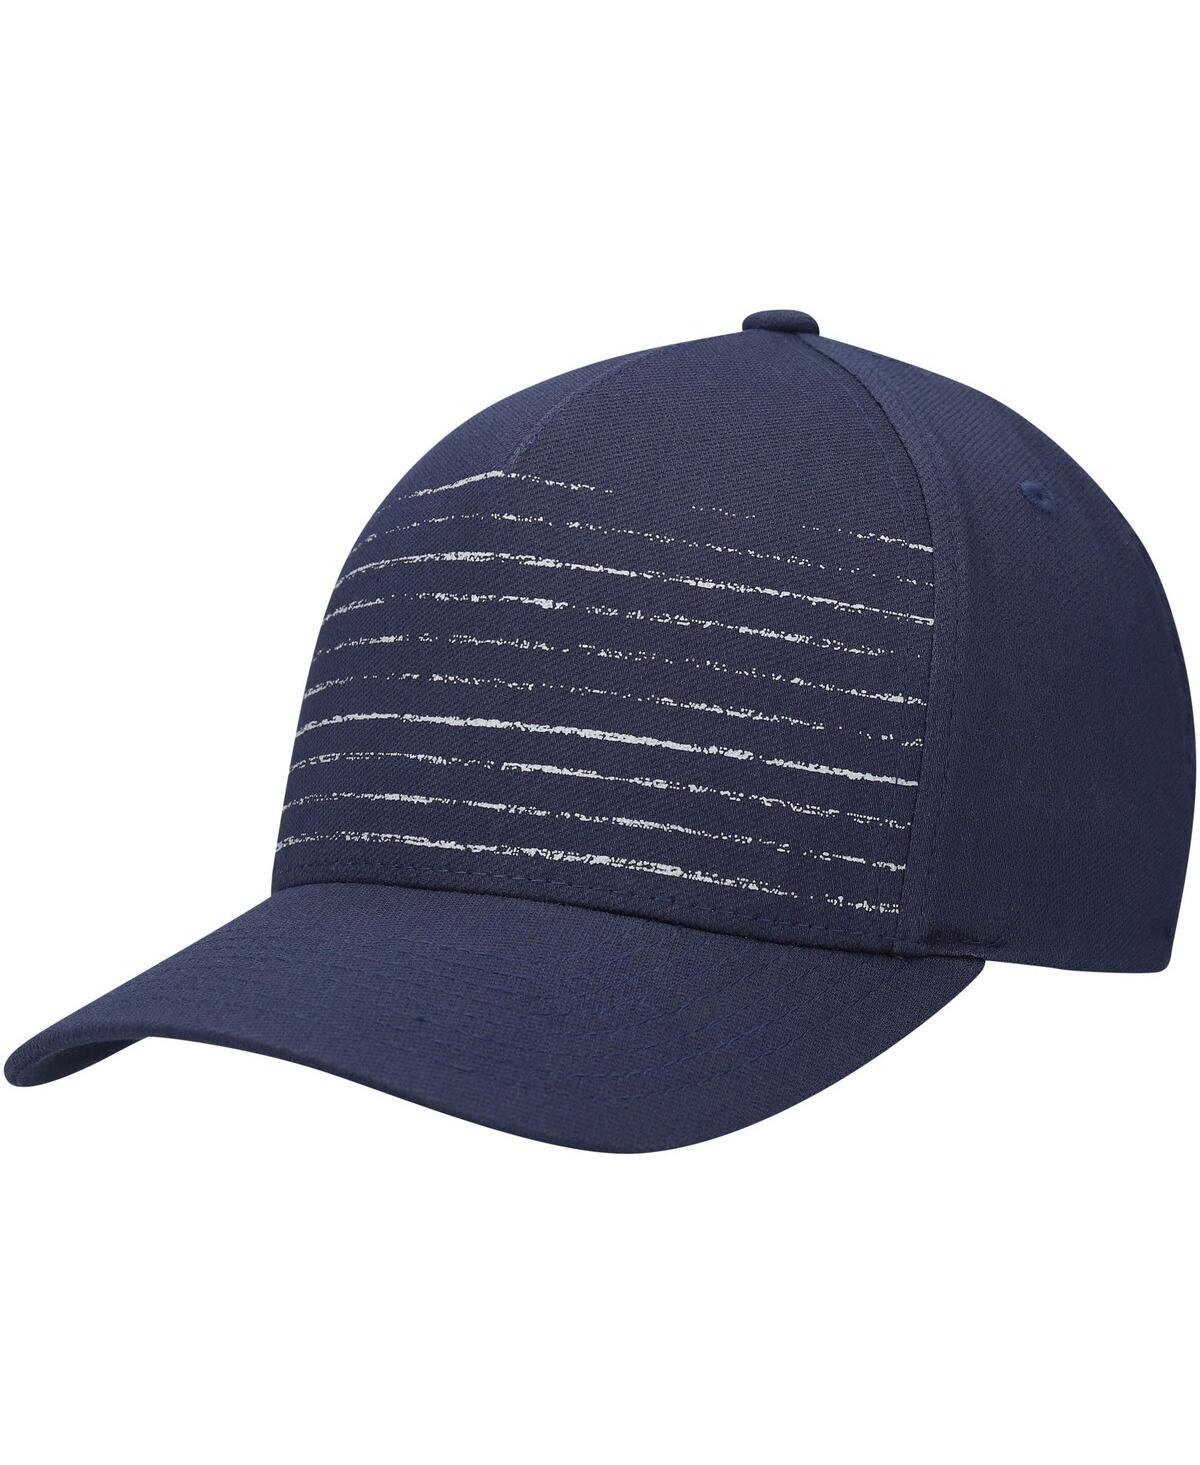 Travis Mathew Men's Travismathew Navy Hot Streak Snapback Hat